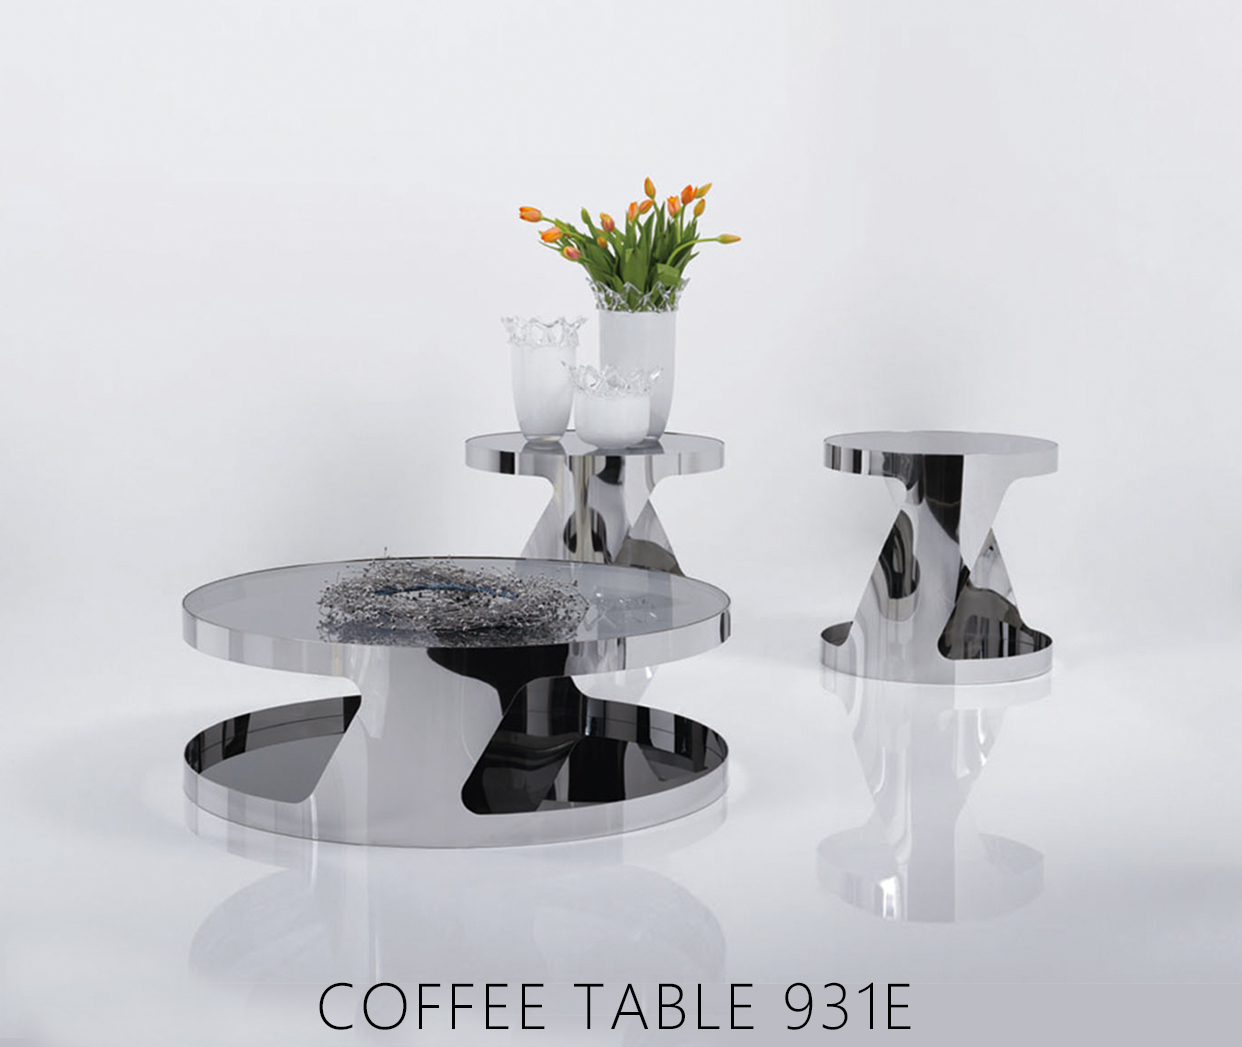 COFFEE TABLE 931E